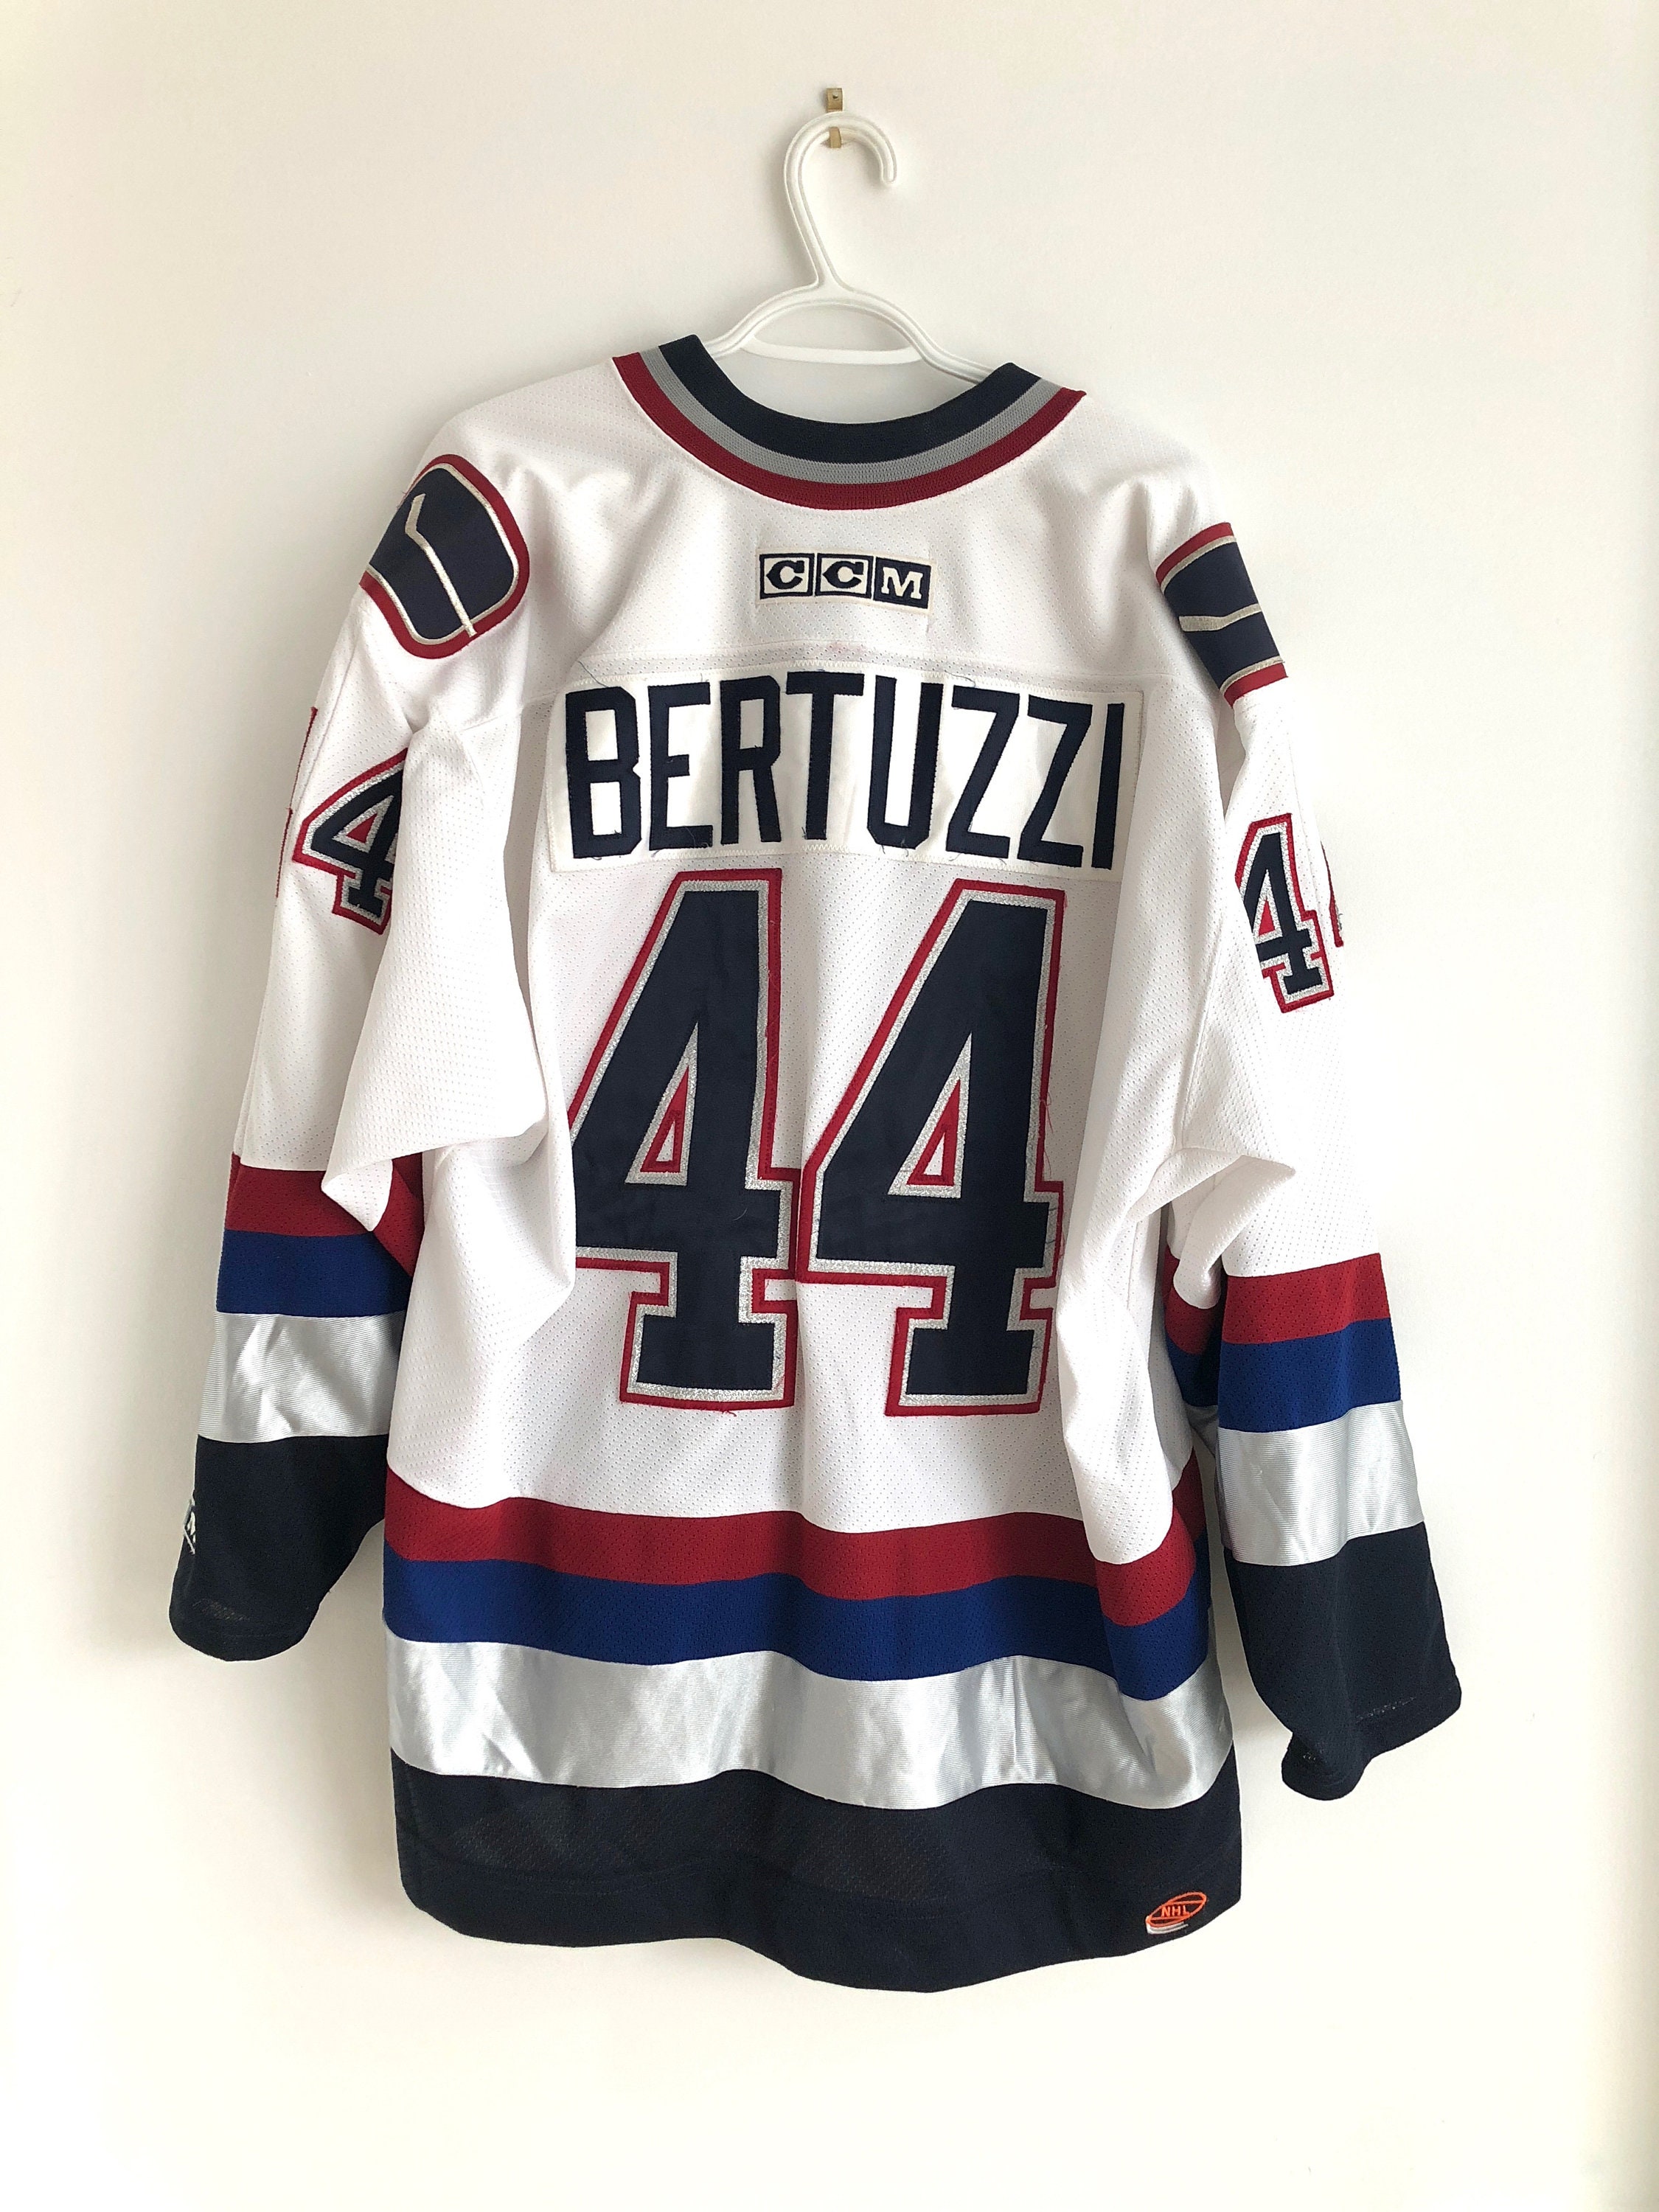 TODD BERTUZZI Vancouver Canucks 2002 CCM Throwback NHL Hockey